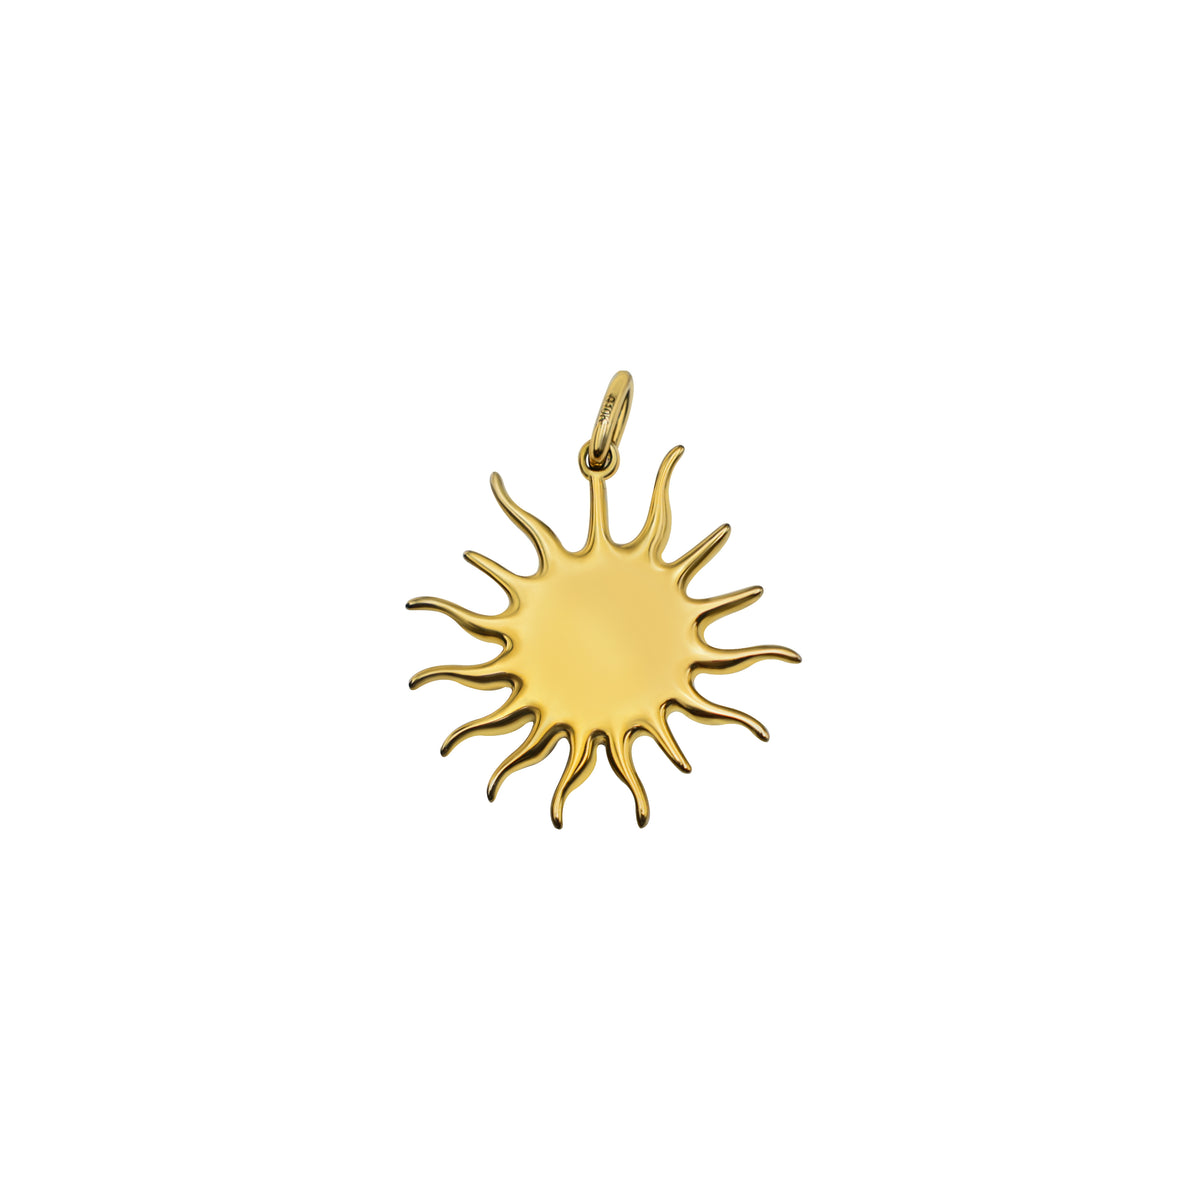 The Golden Sun Pendant